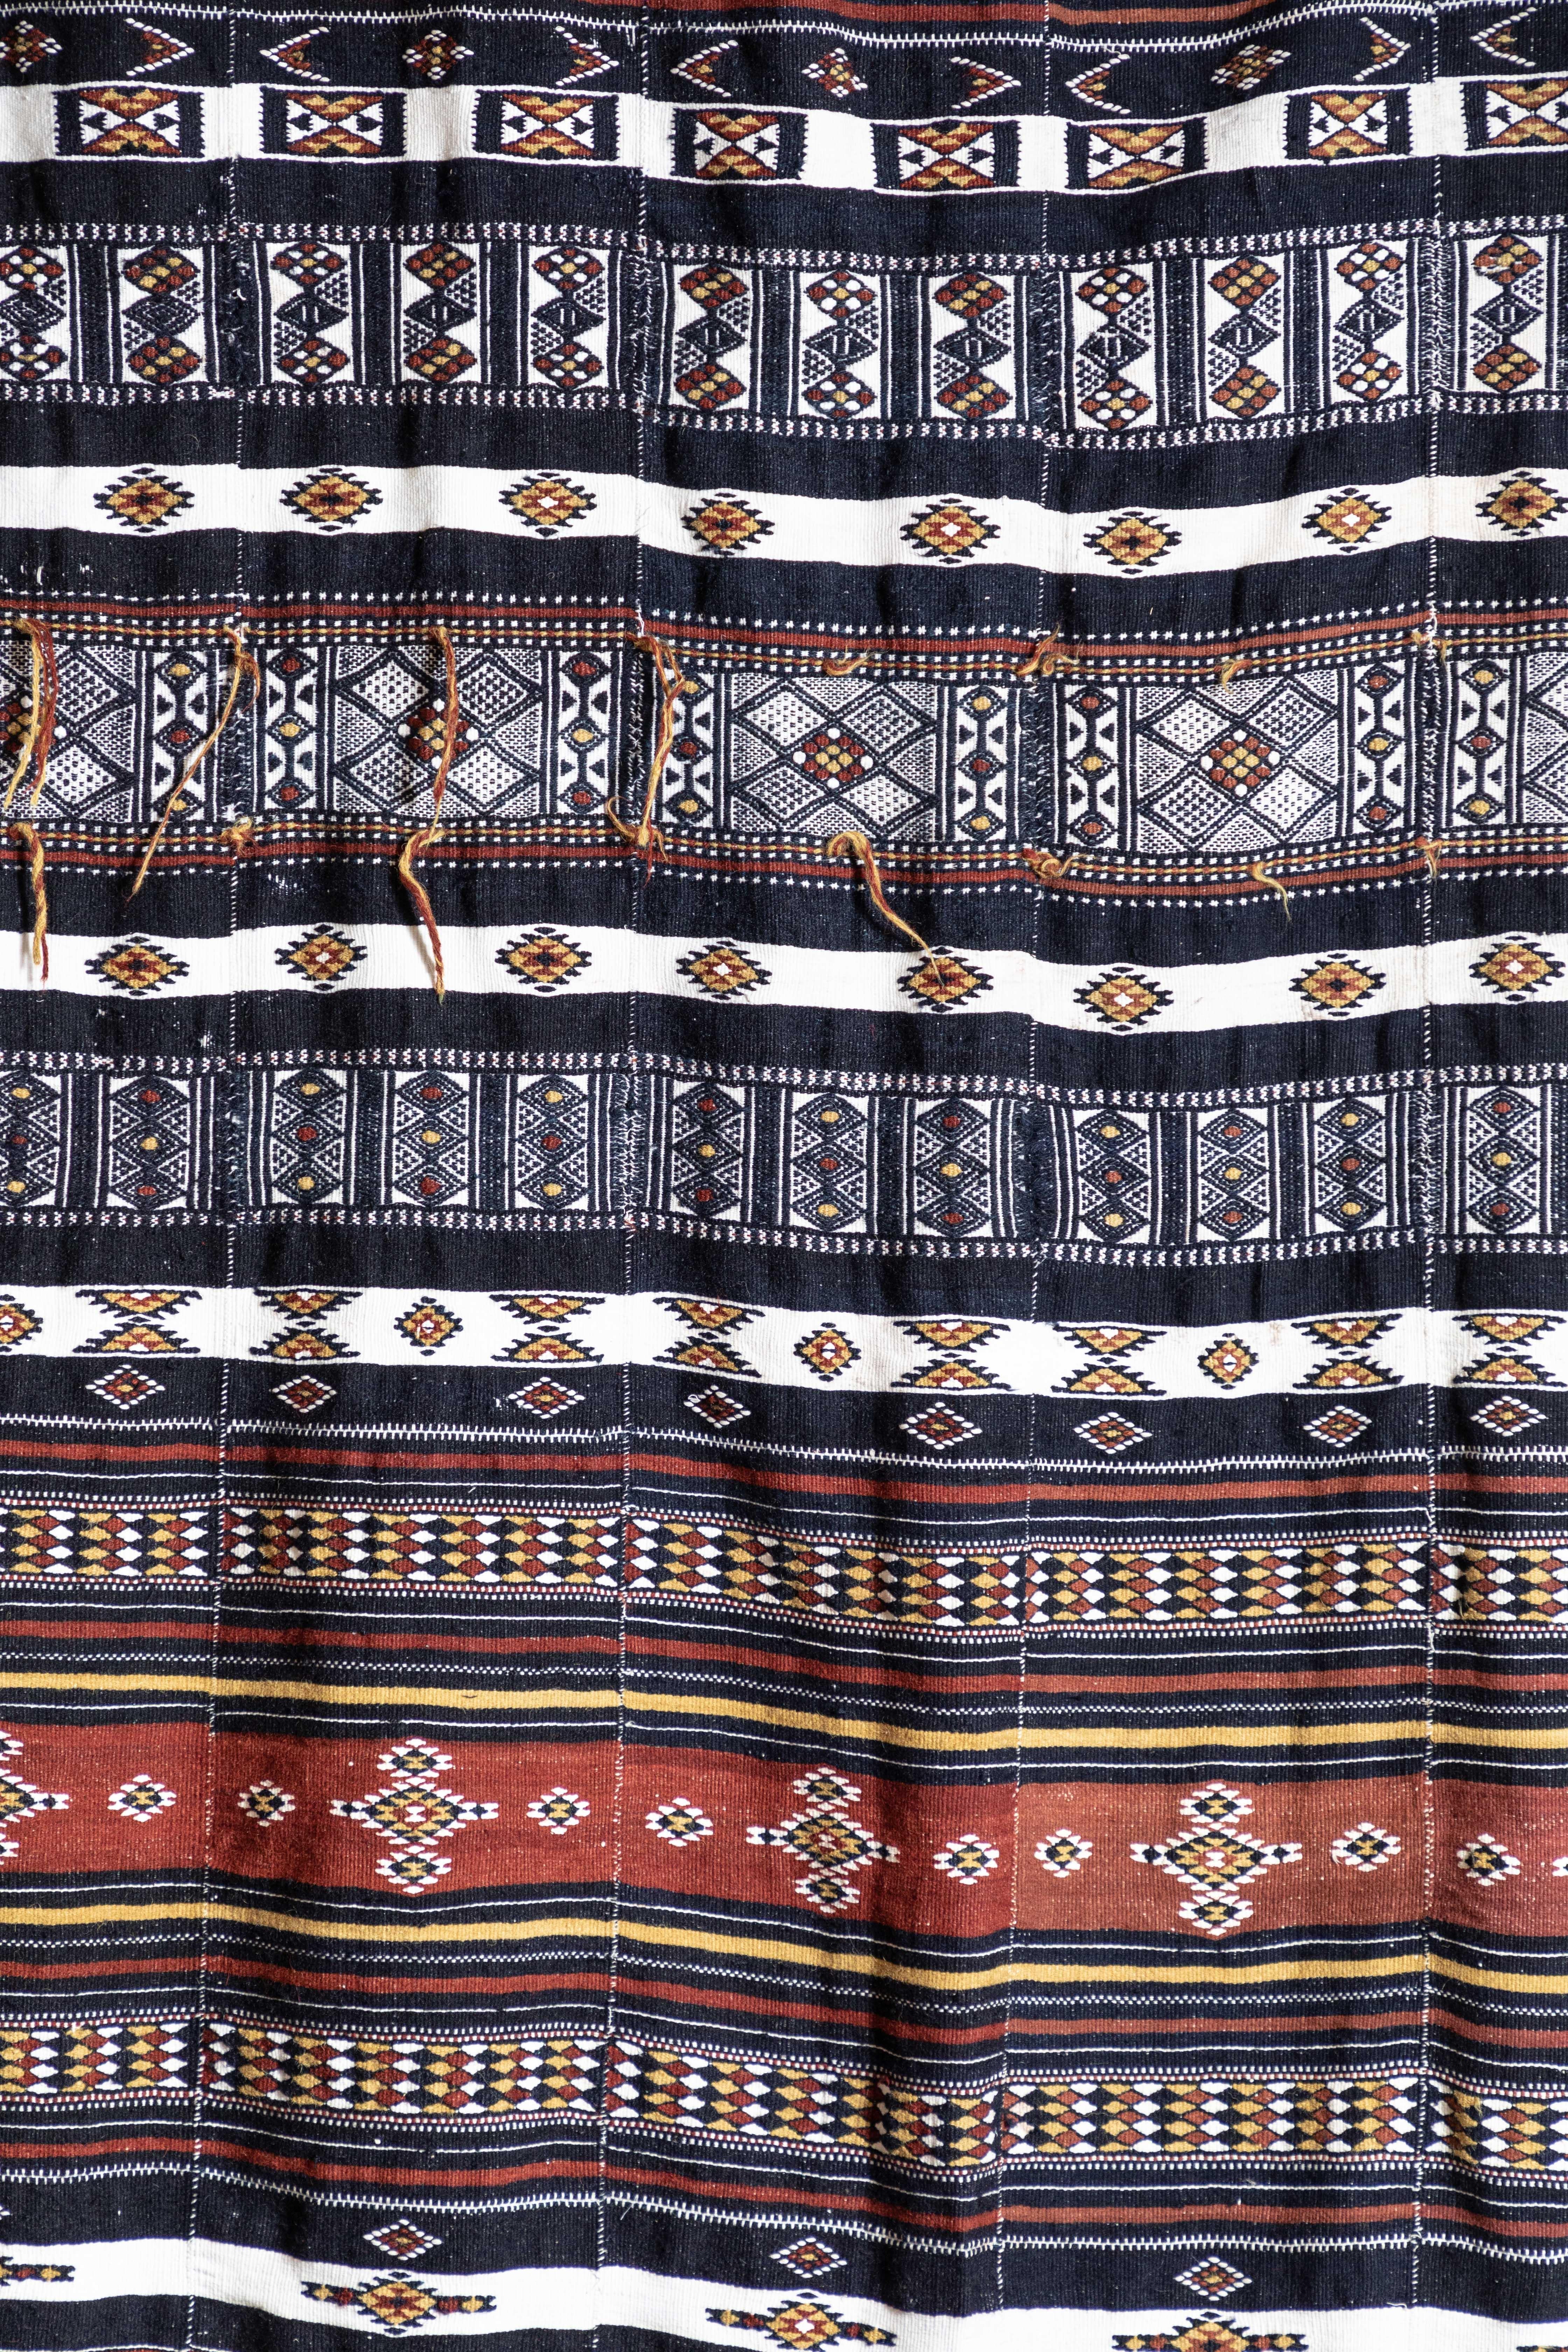 Arkilla Kerka Fulani Wedding Blanket In Fair Condition For Sale In Los Angeles, CA